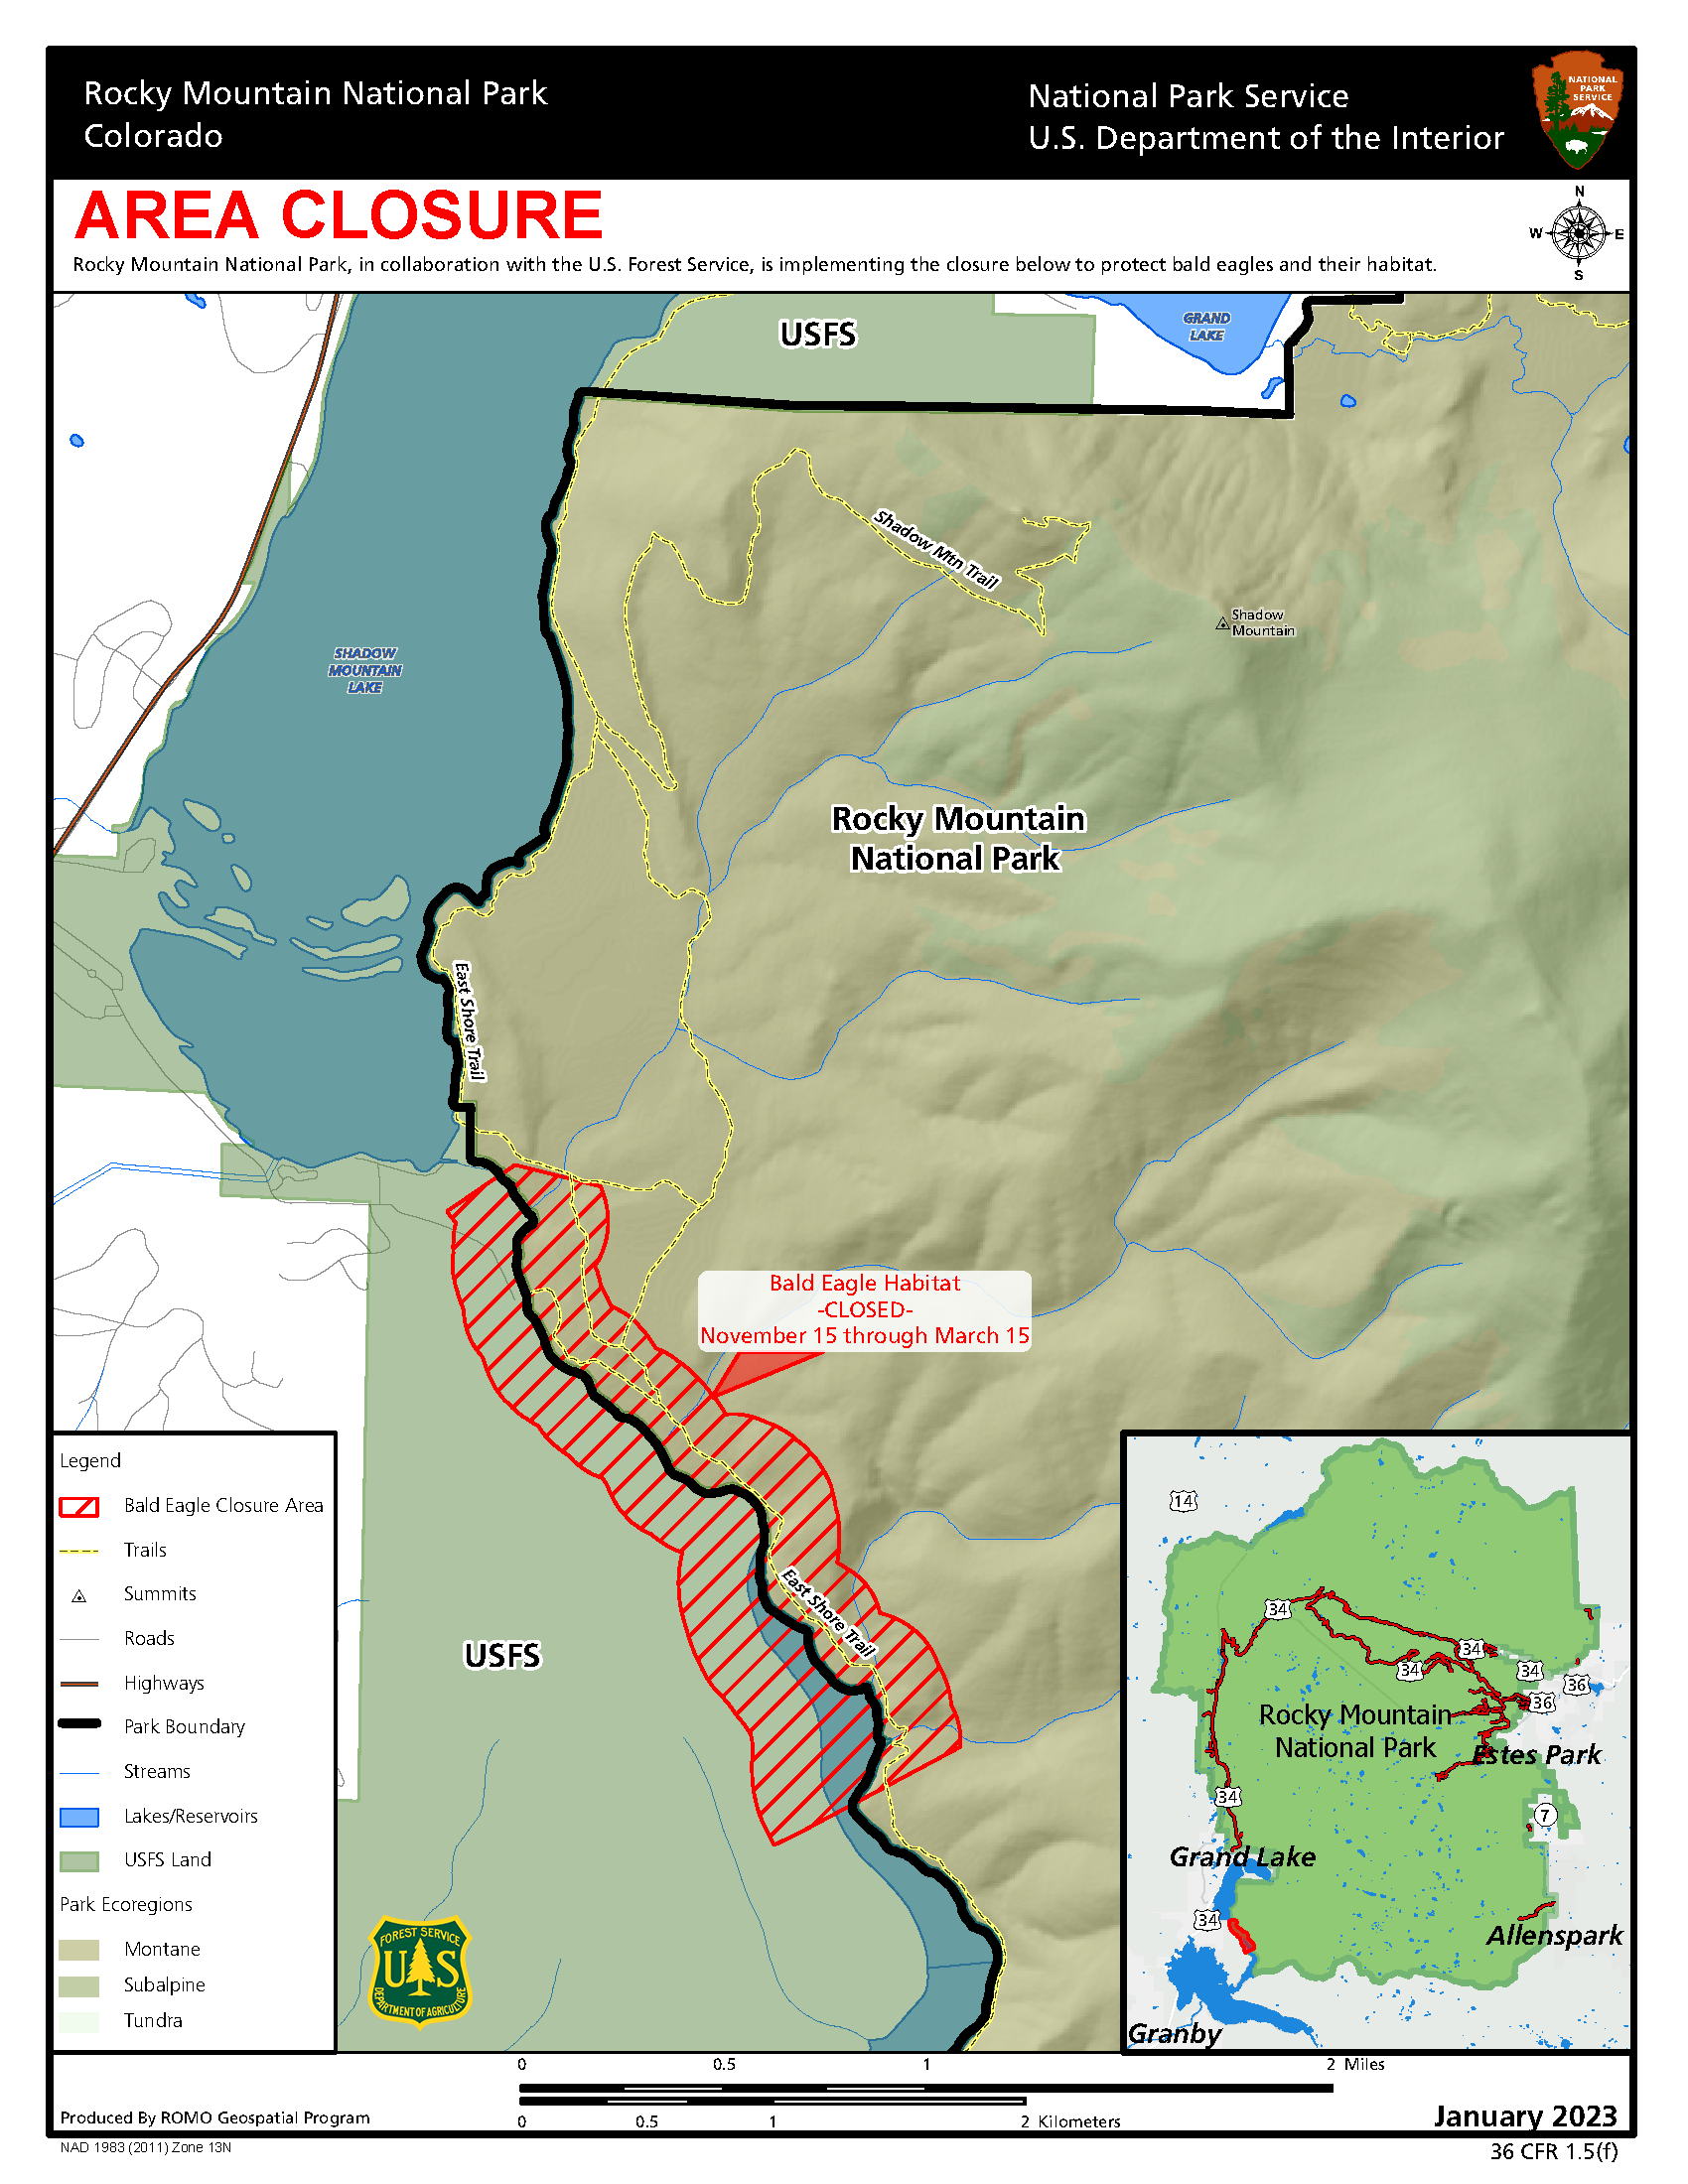 Bald Eagle Closure Map along the Colorado River